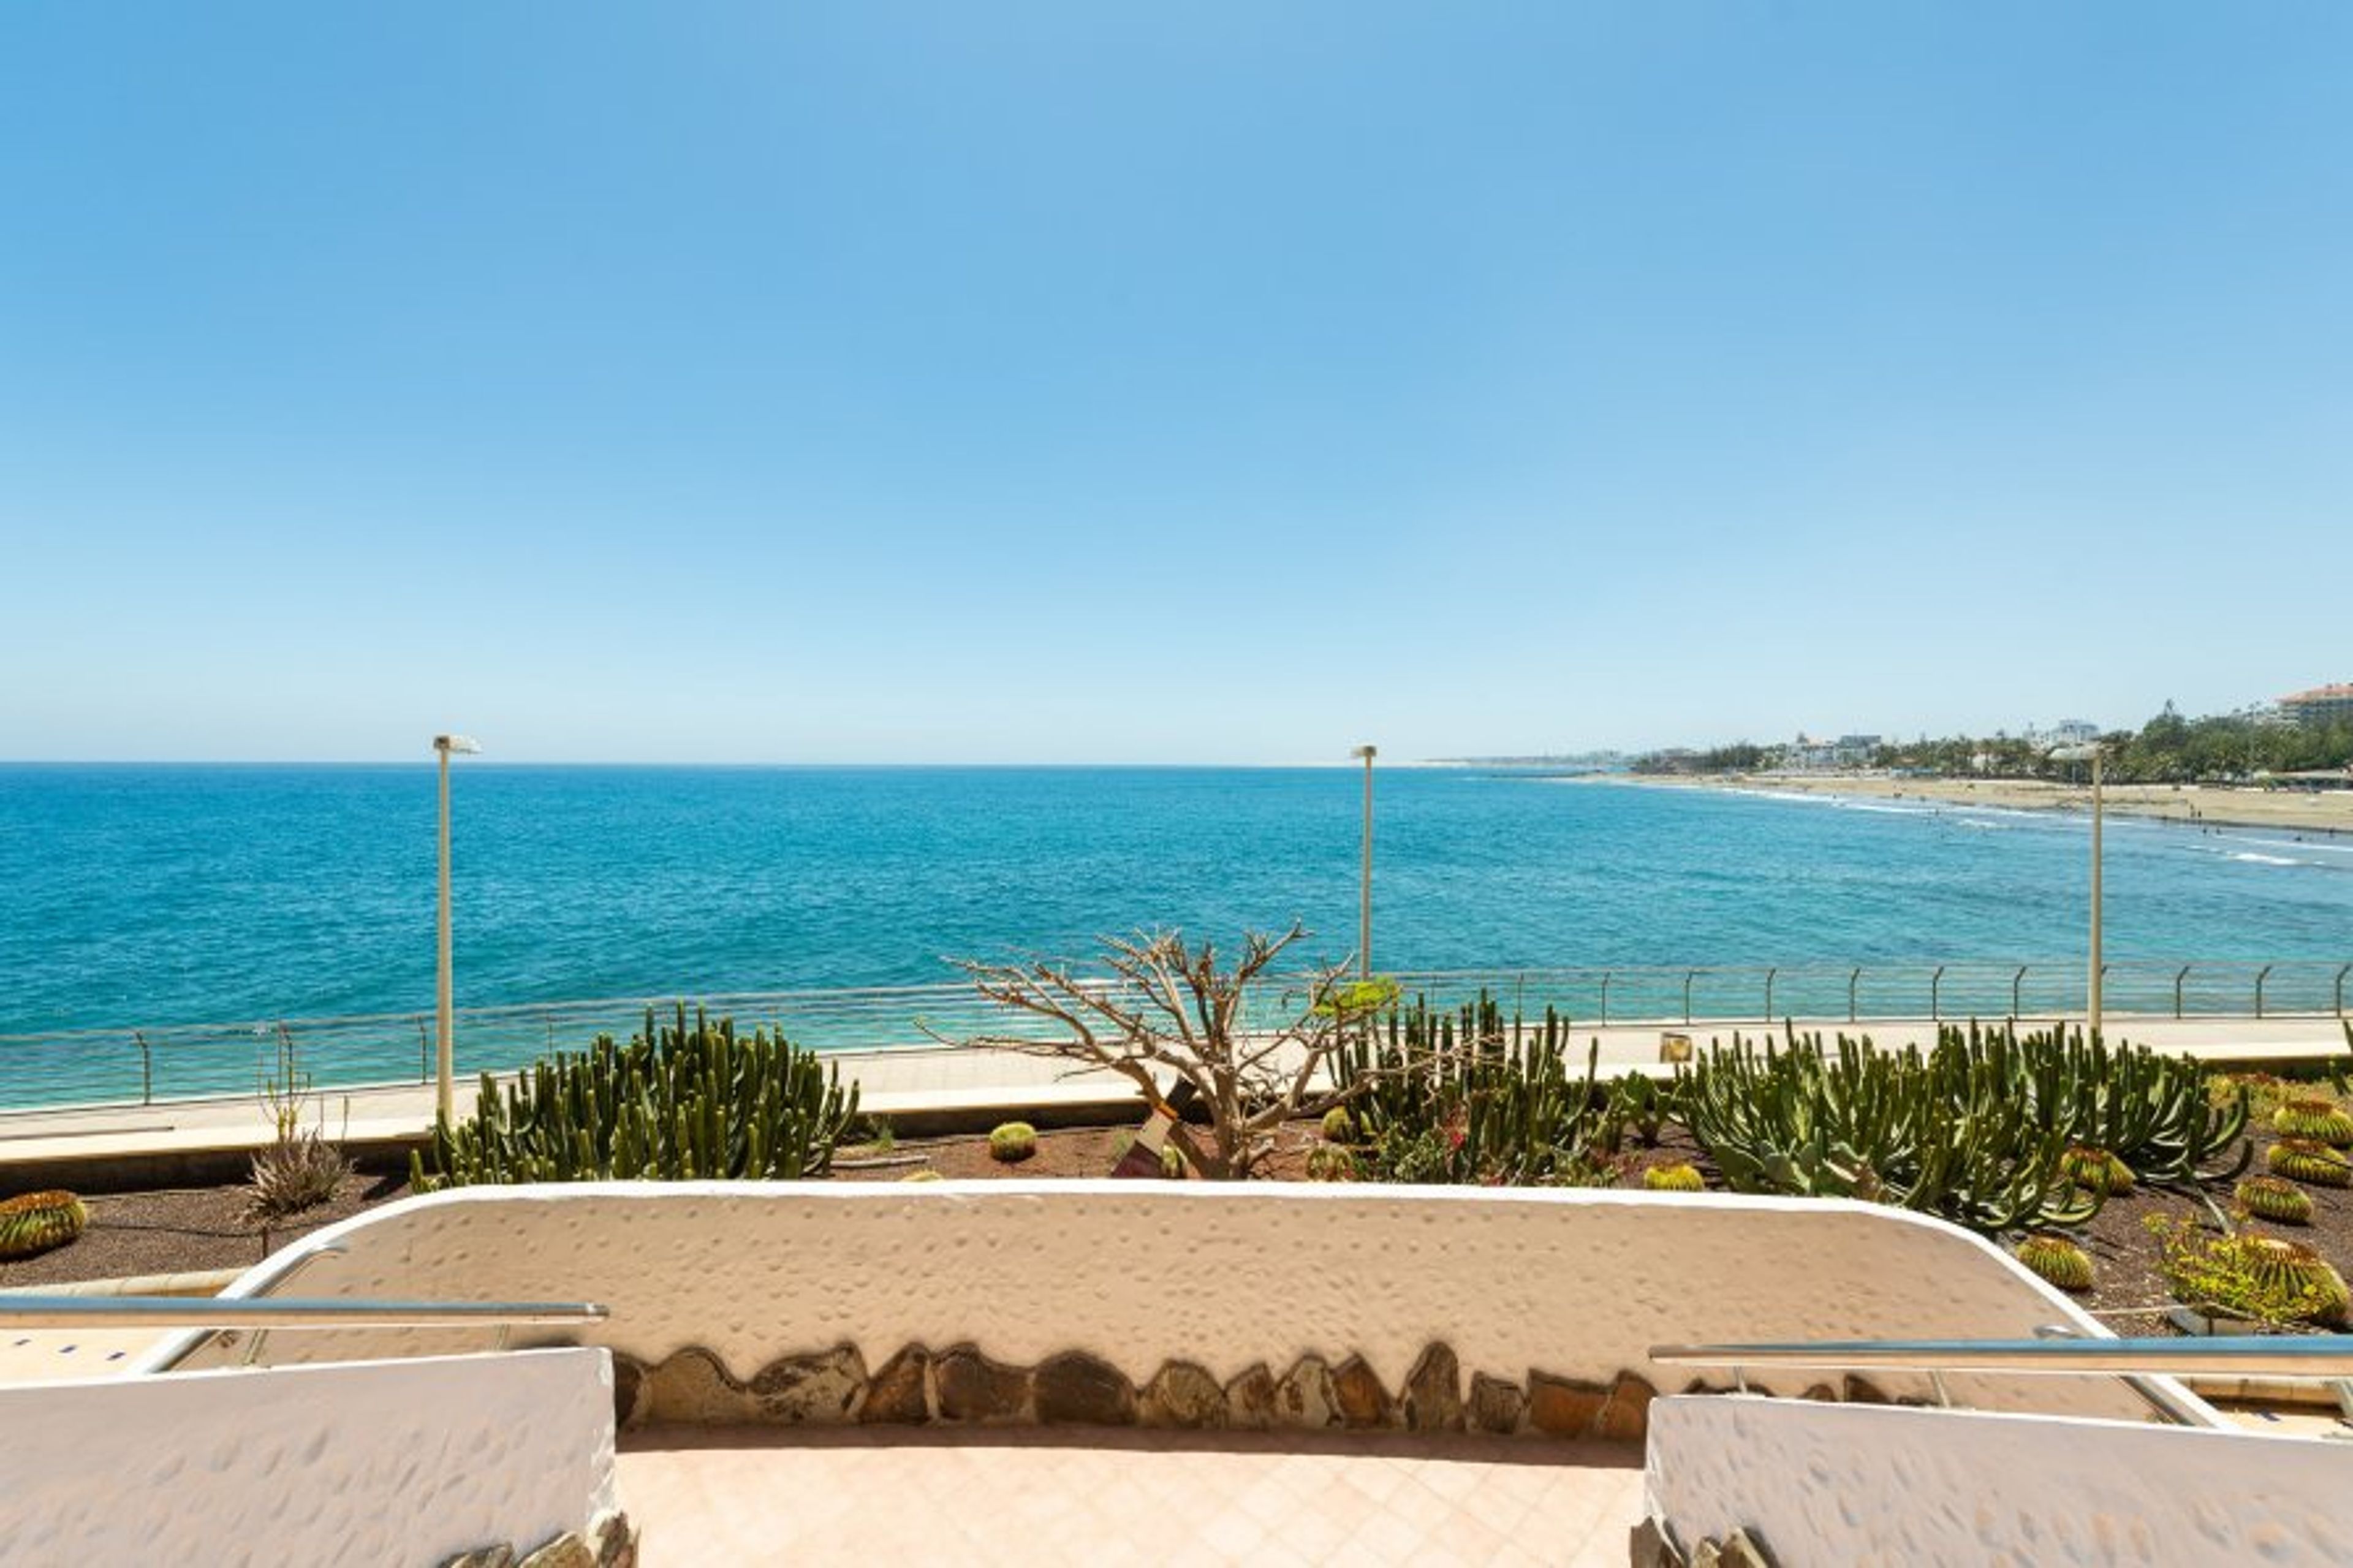 Panoramic promenade 7 kms  walk  along the beachfront to the center 